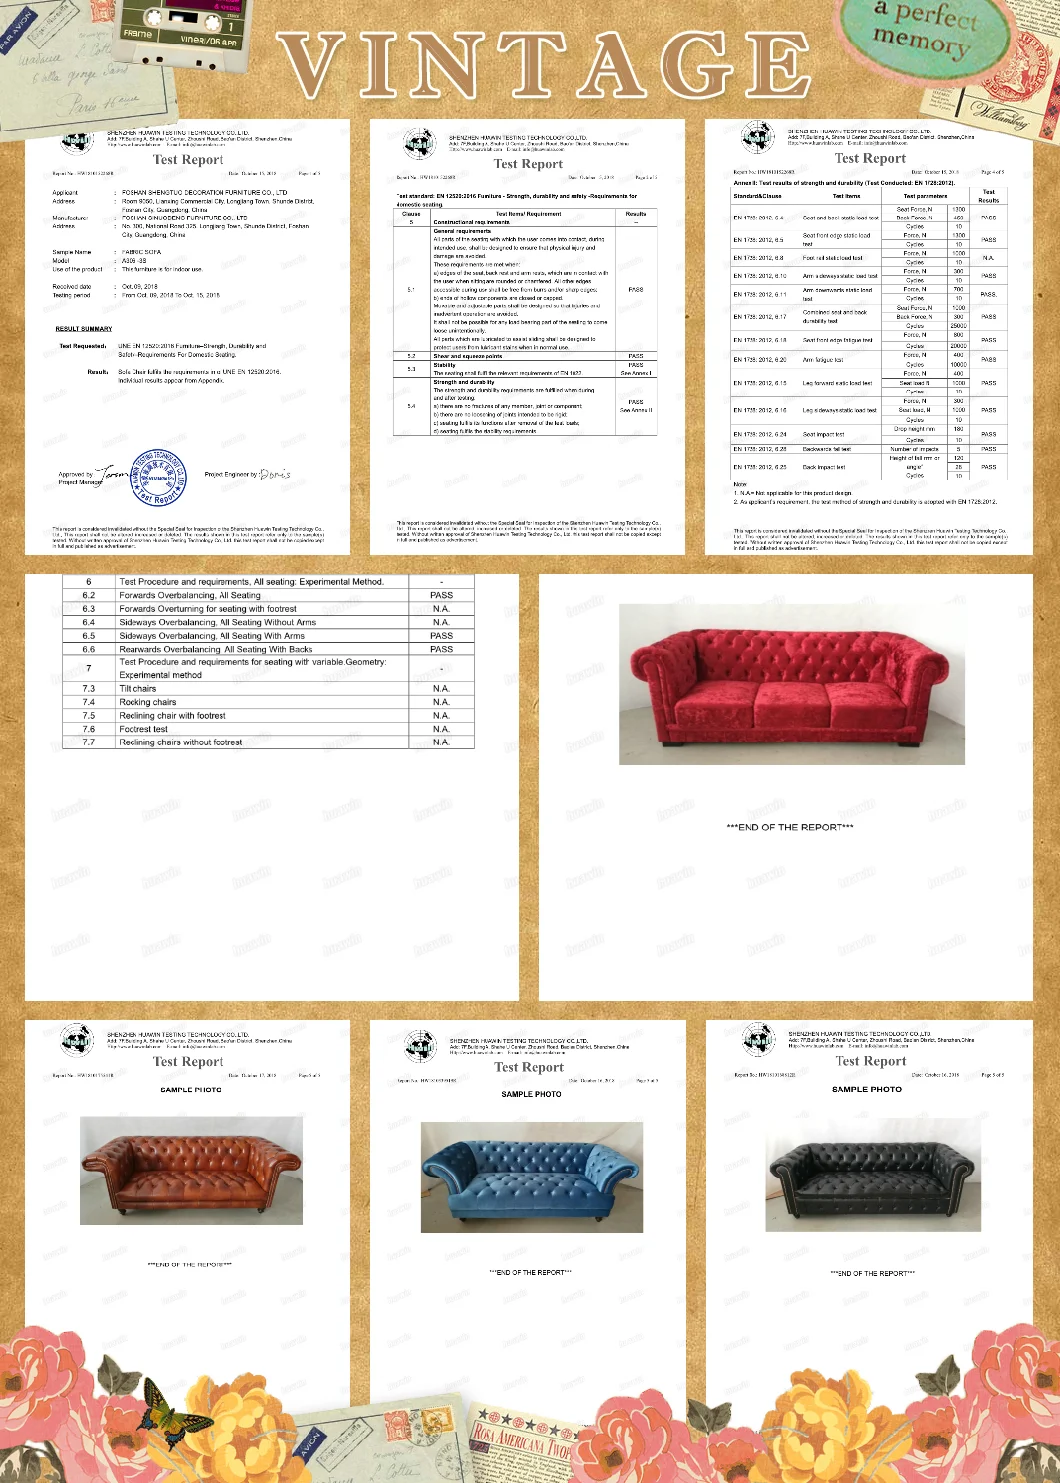 2019 Latest Luxury Design Living Room Sofa Italian Europe Classic Vintage Upholstery Tufted Chesterfield Sofa